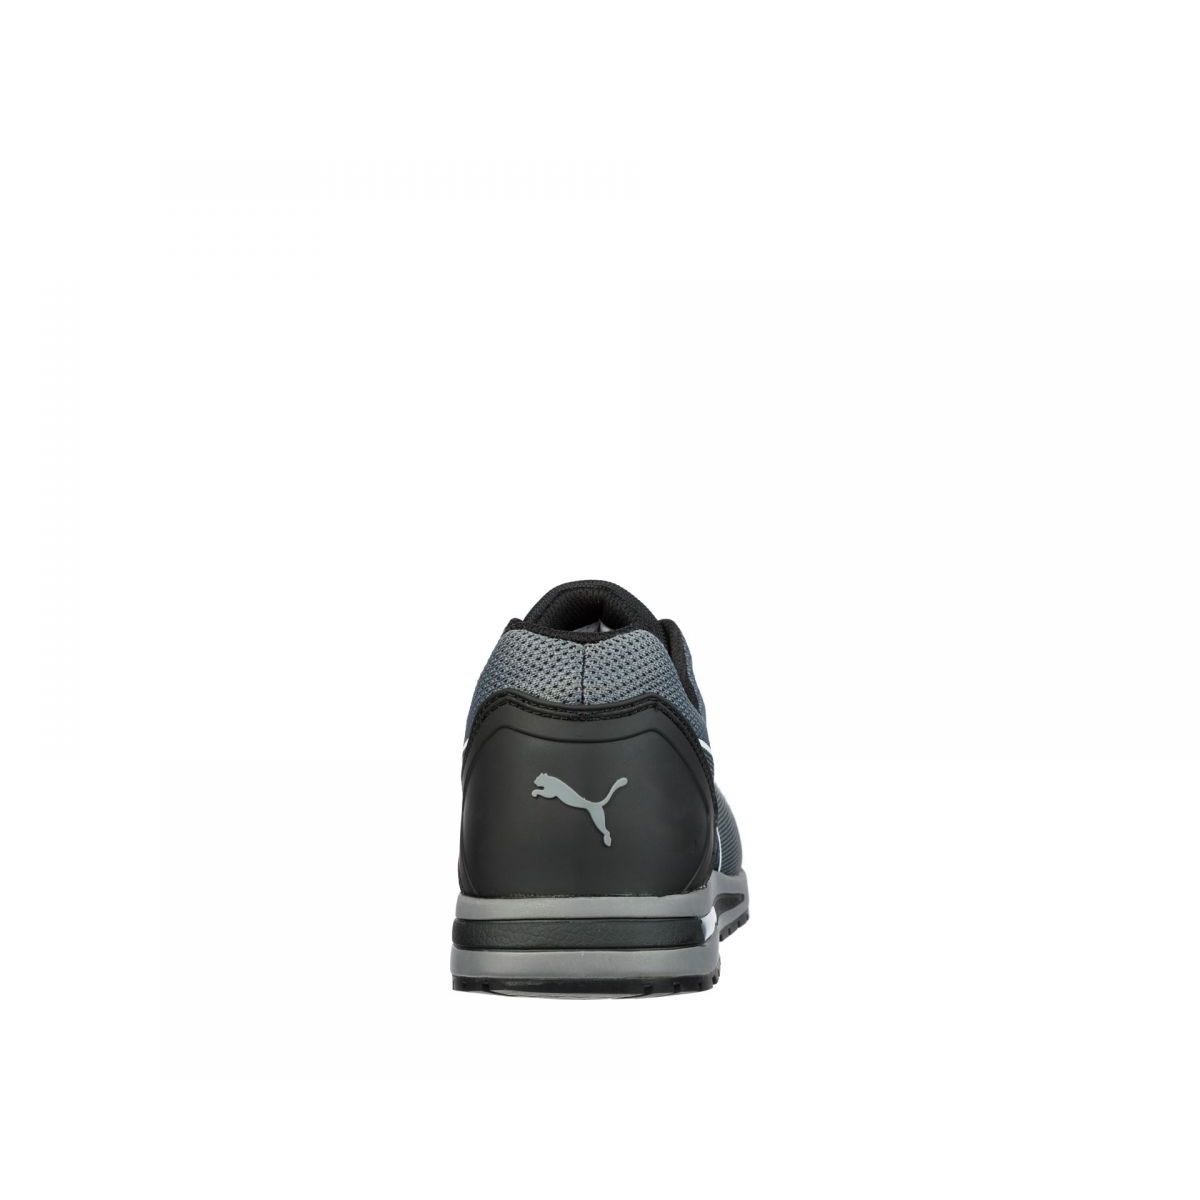 PUMA Safety Men's Elevate Knit Low Composite Toe ESD Work Shoe Black - 643165 ONE SIZE BLACK - BLACK, 13